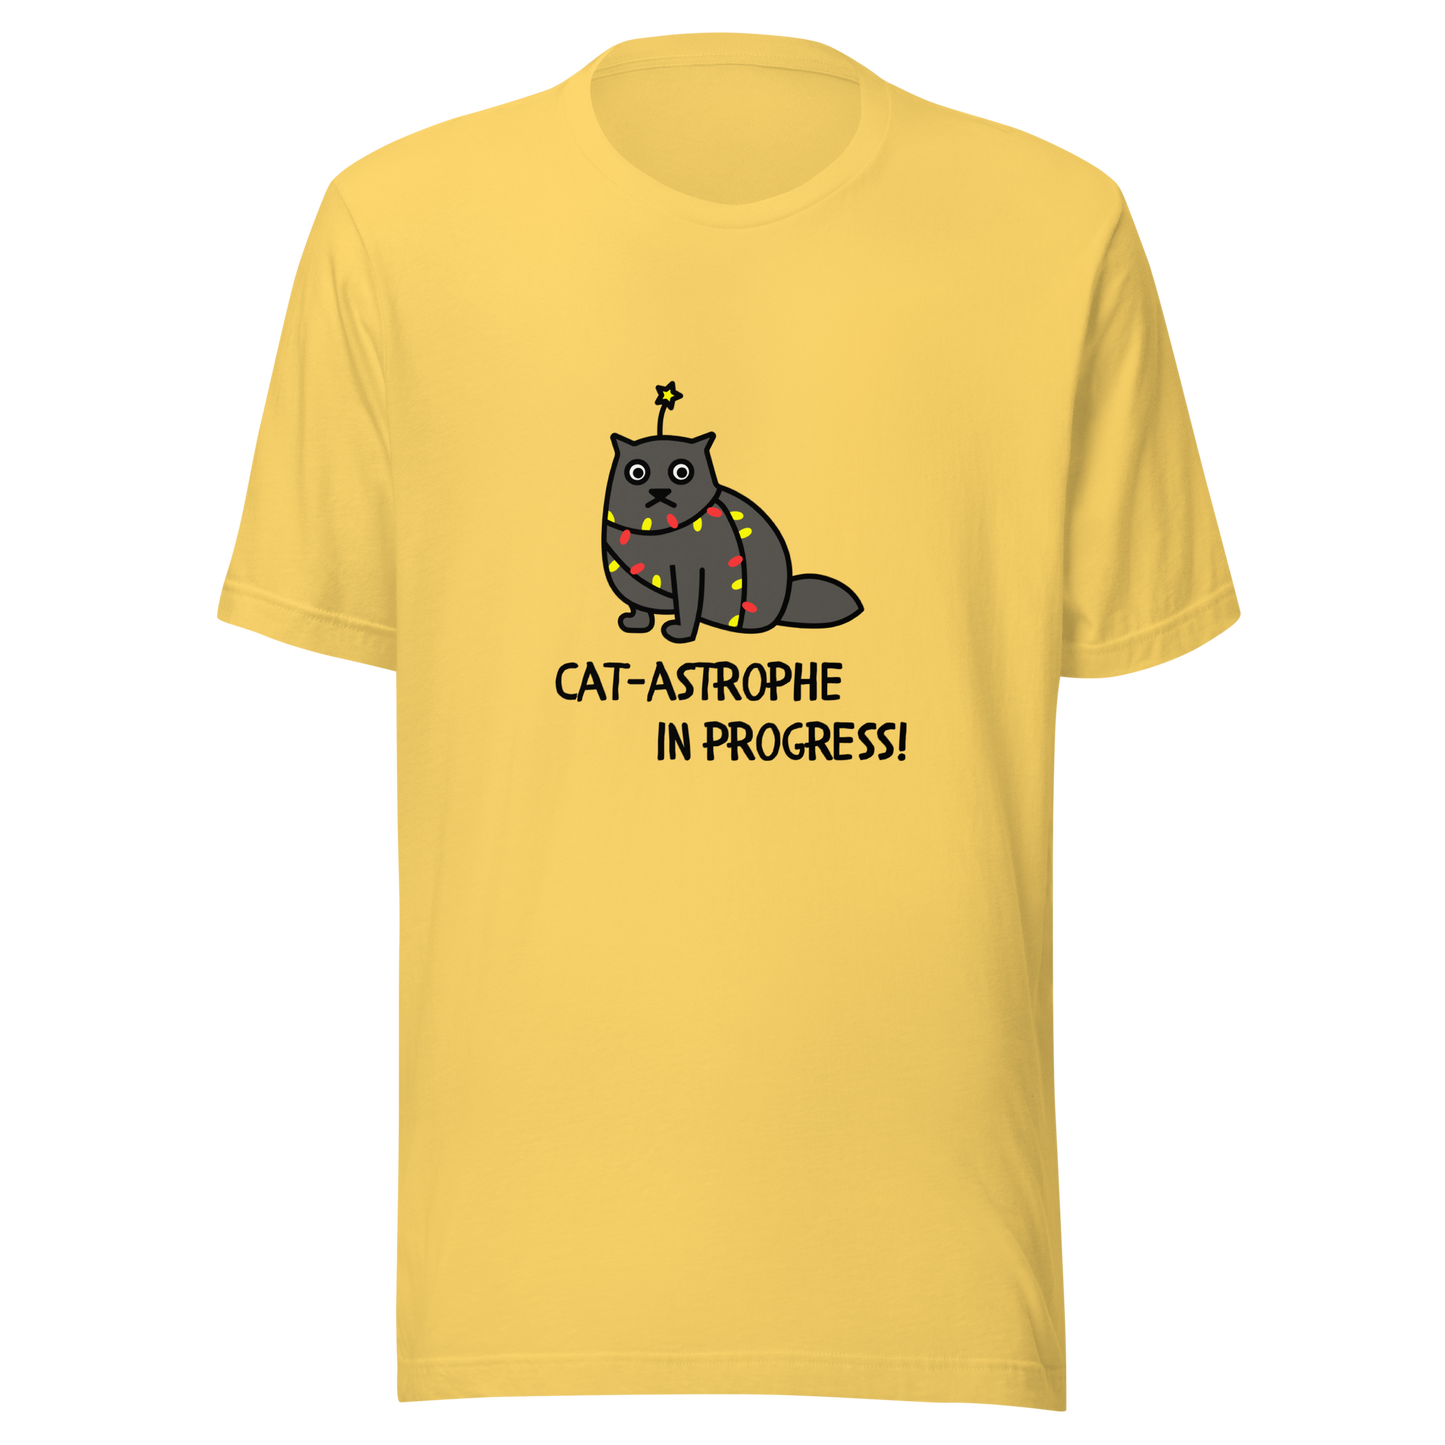 Unisex T-Shirt 'Cat-astrophe in Progress!' - Show off Your Love for Feline Mischief in Style!